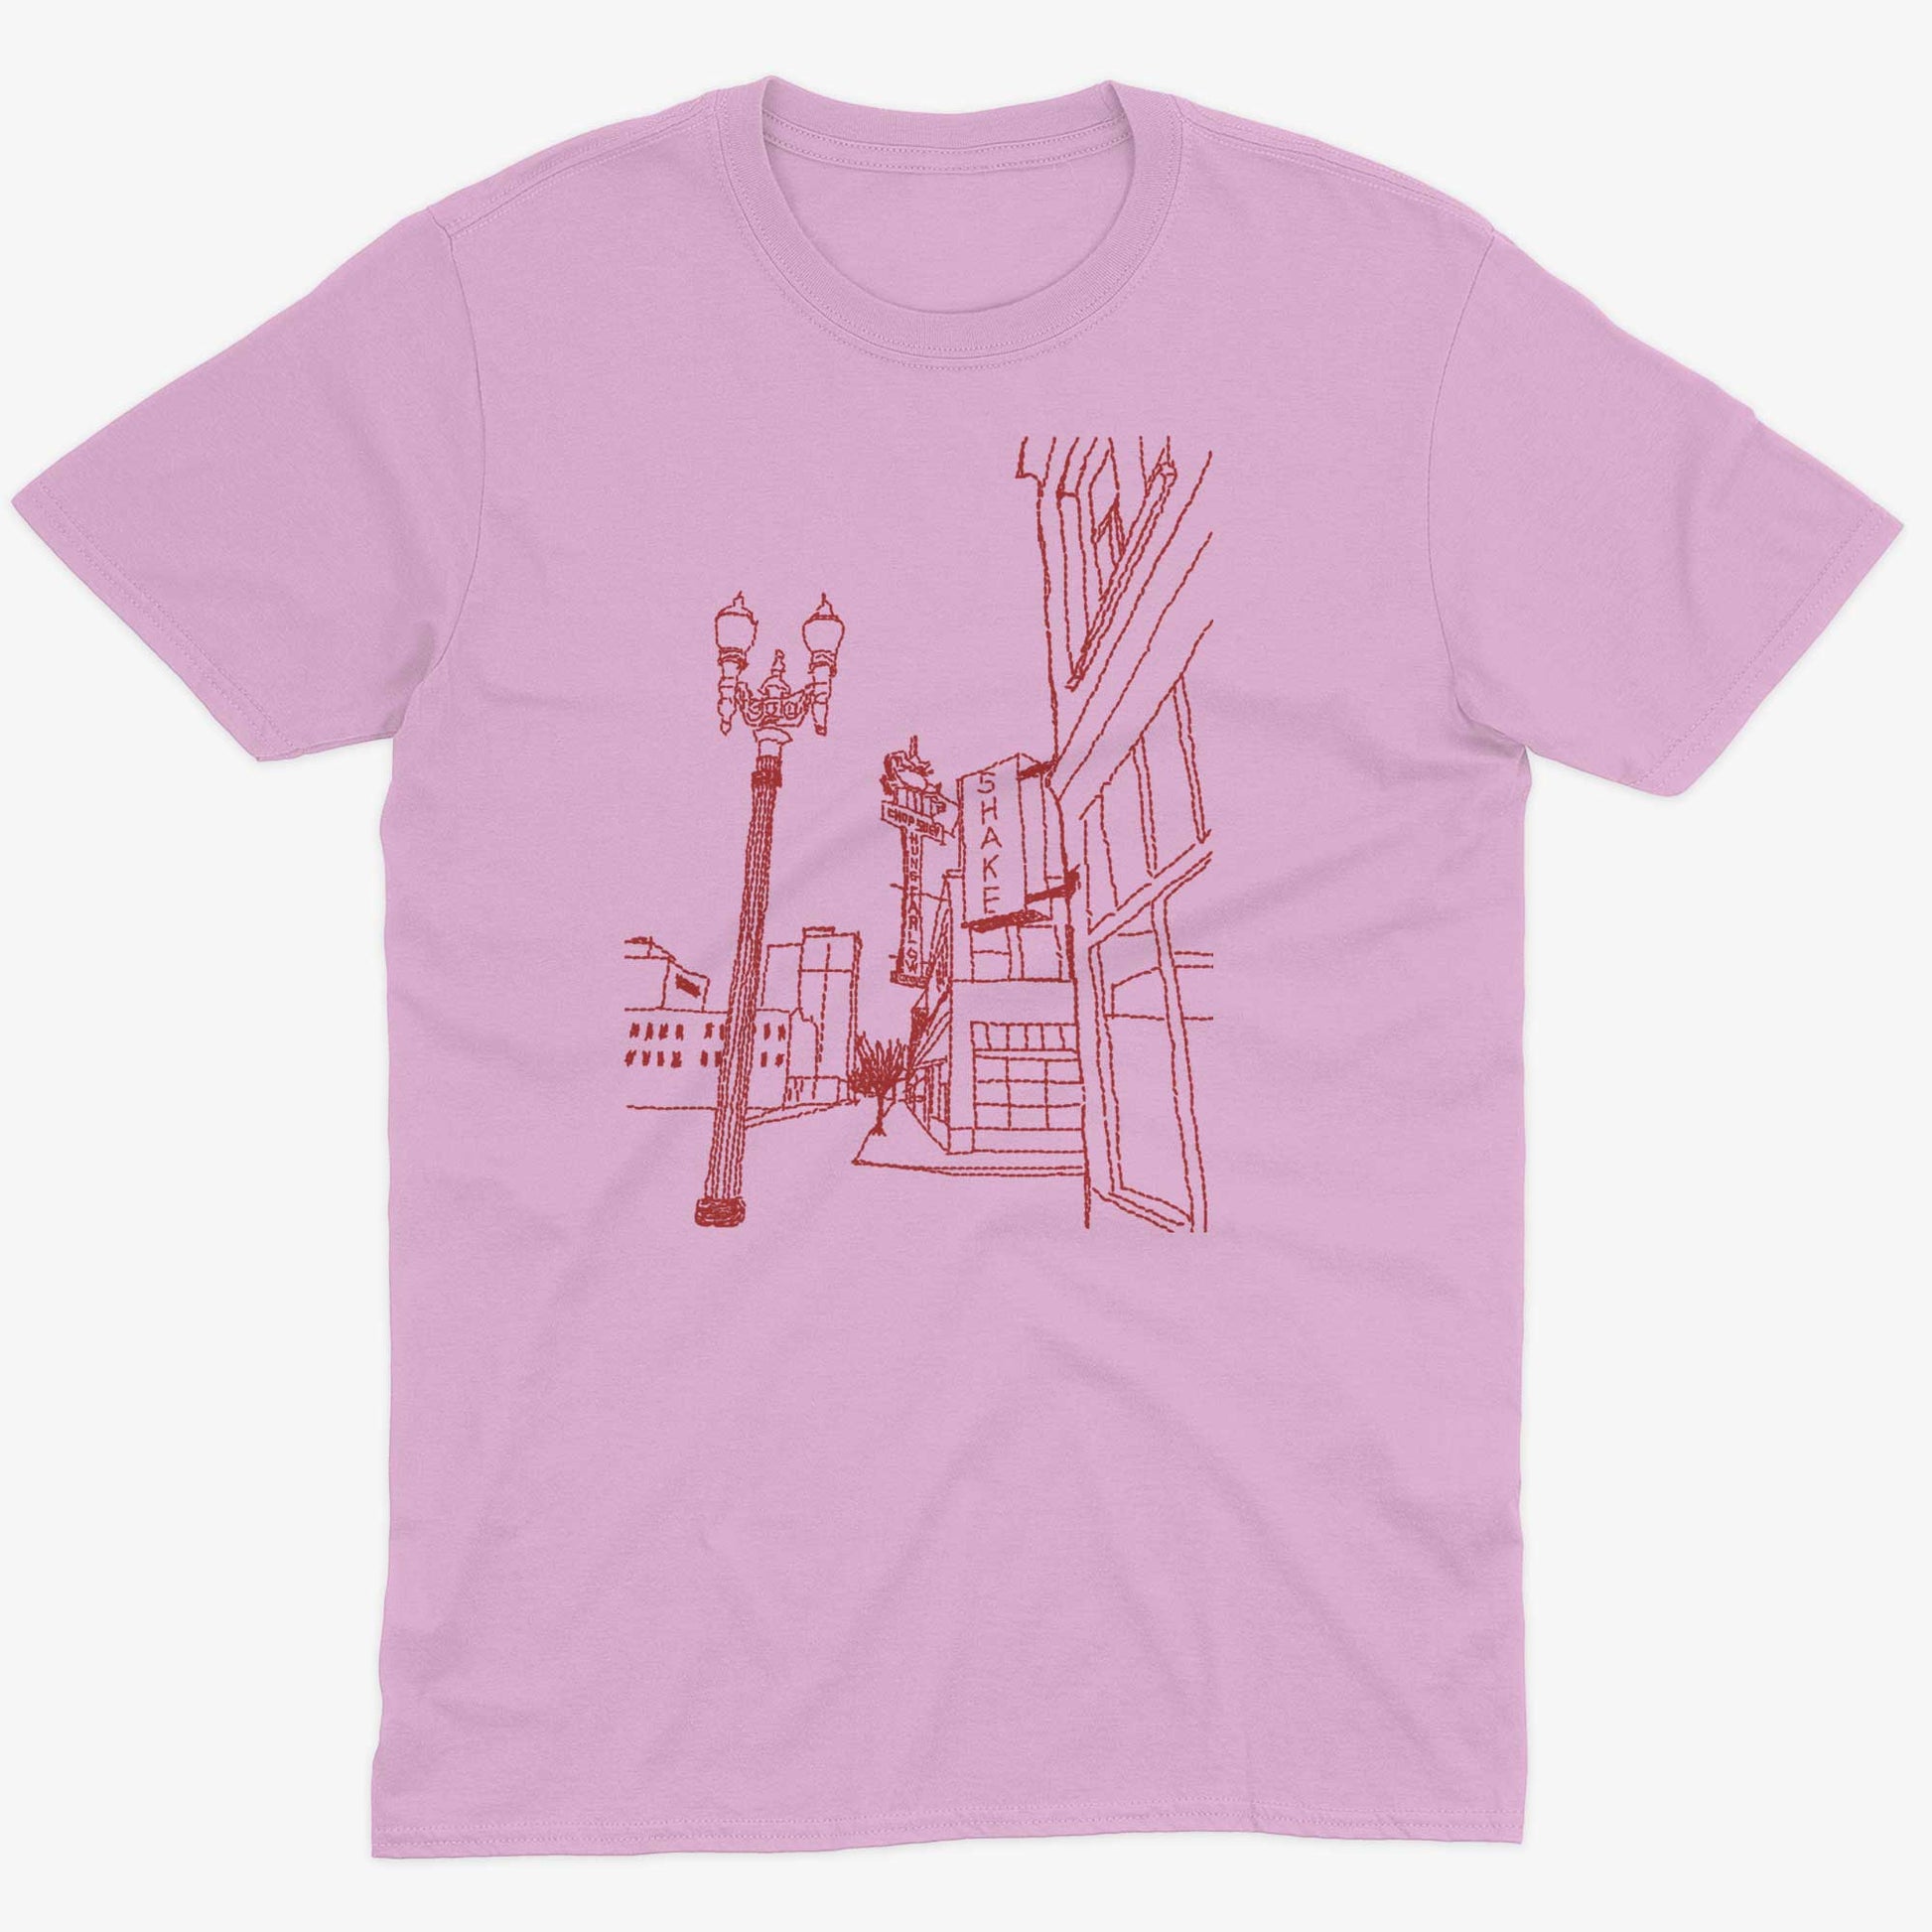 Hung Far Low Restaurant Unisex Or Women's Cotton T-shirt-Pink-Unisex